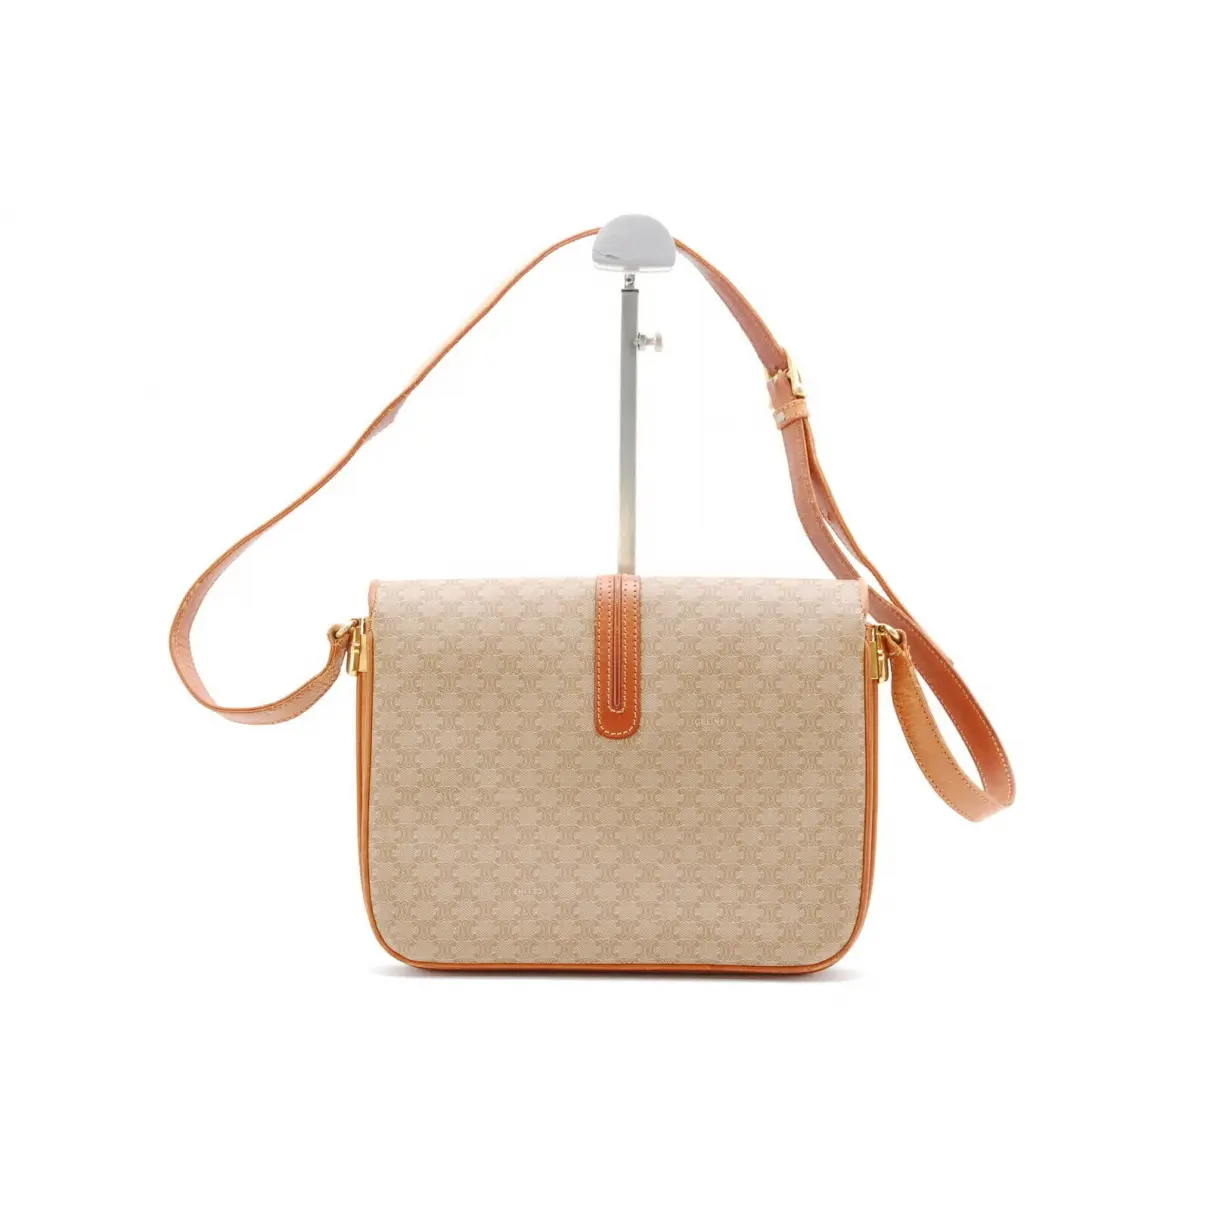 Buy Celine Cloth handbag online - Vintage